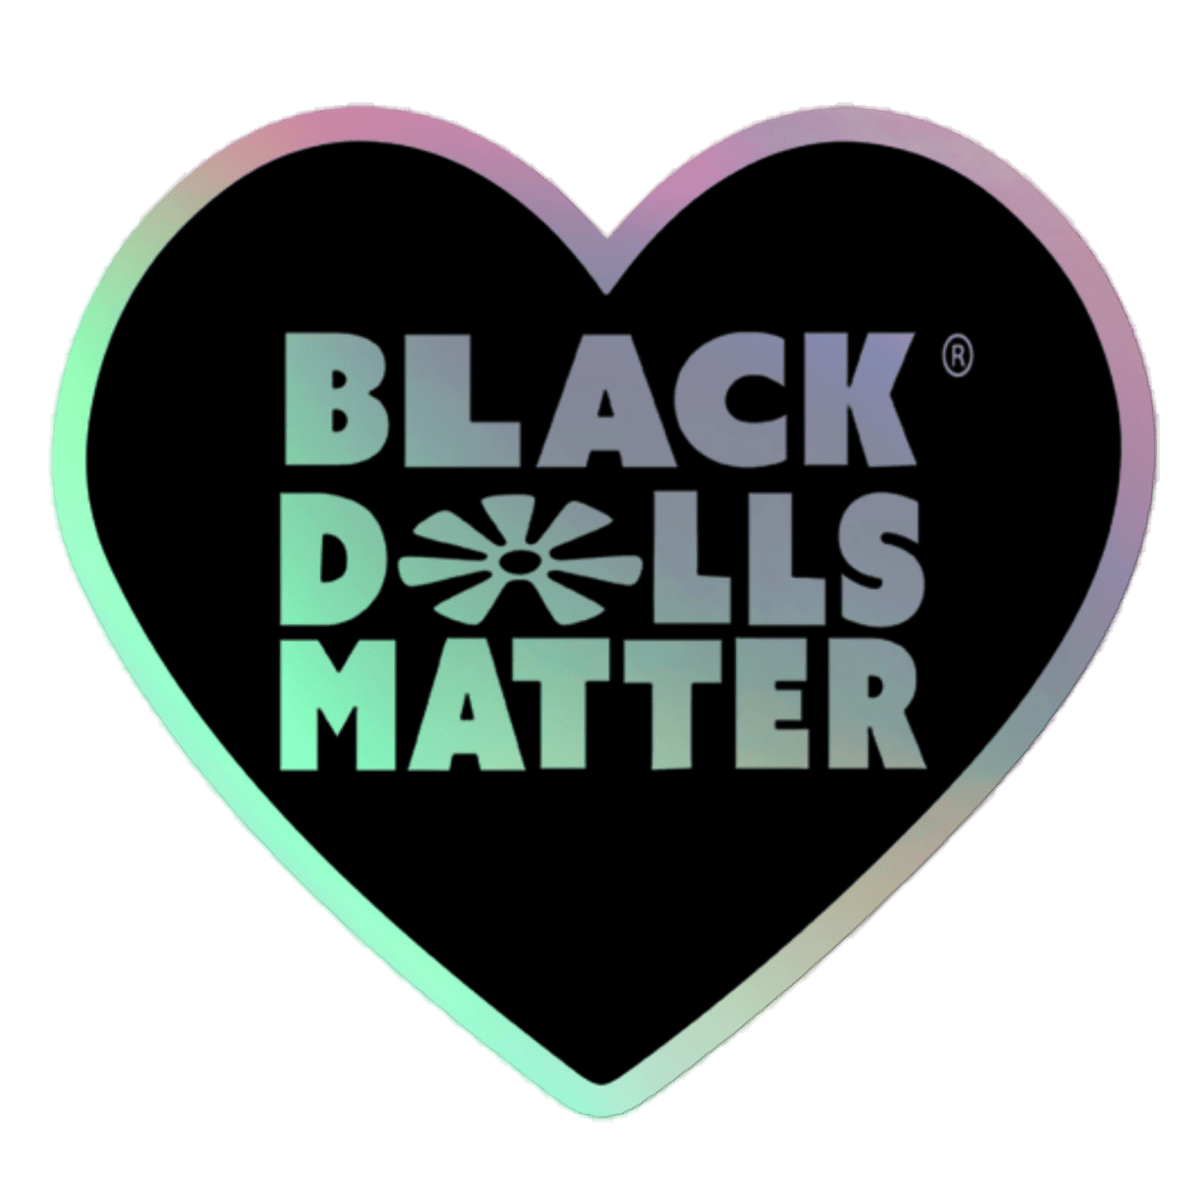 BLACK DOLLS MATTER